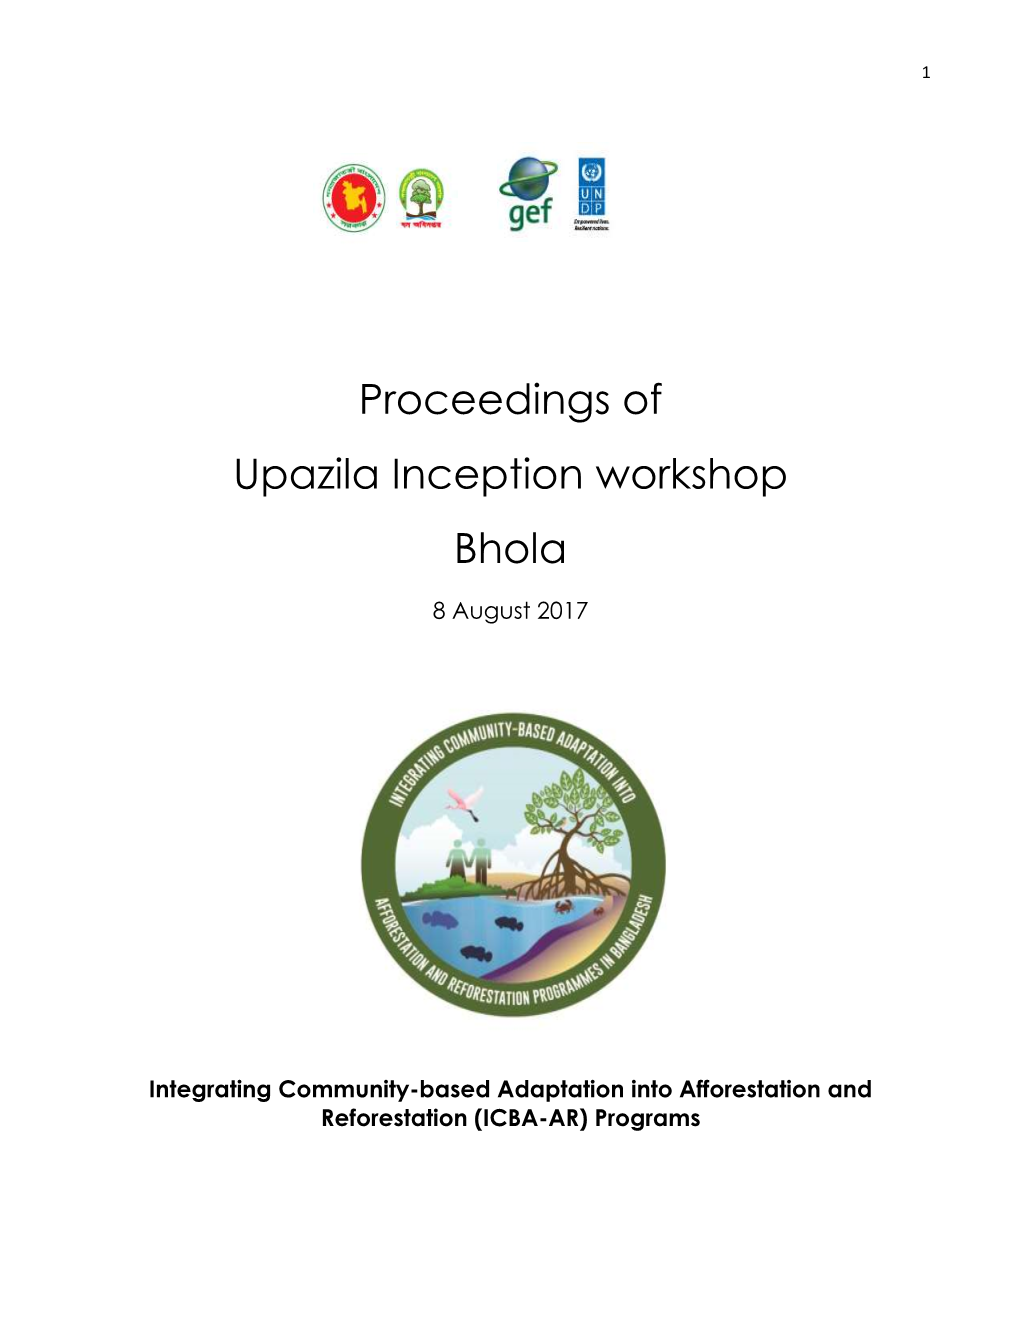 Proceedings of Upazila Inception Workshop Bhola